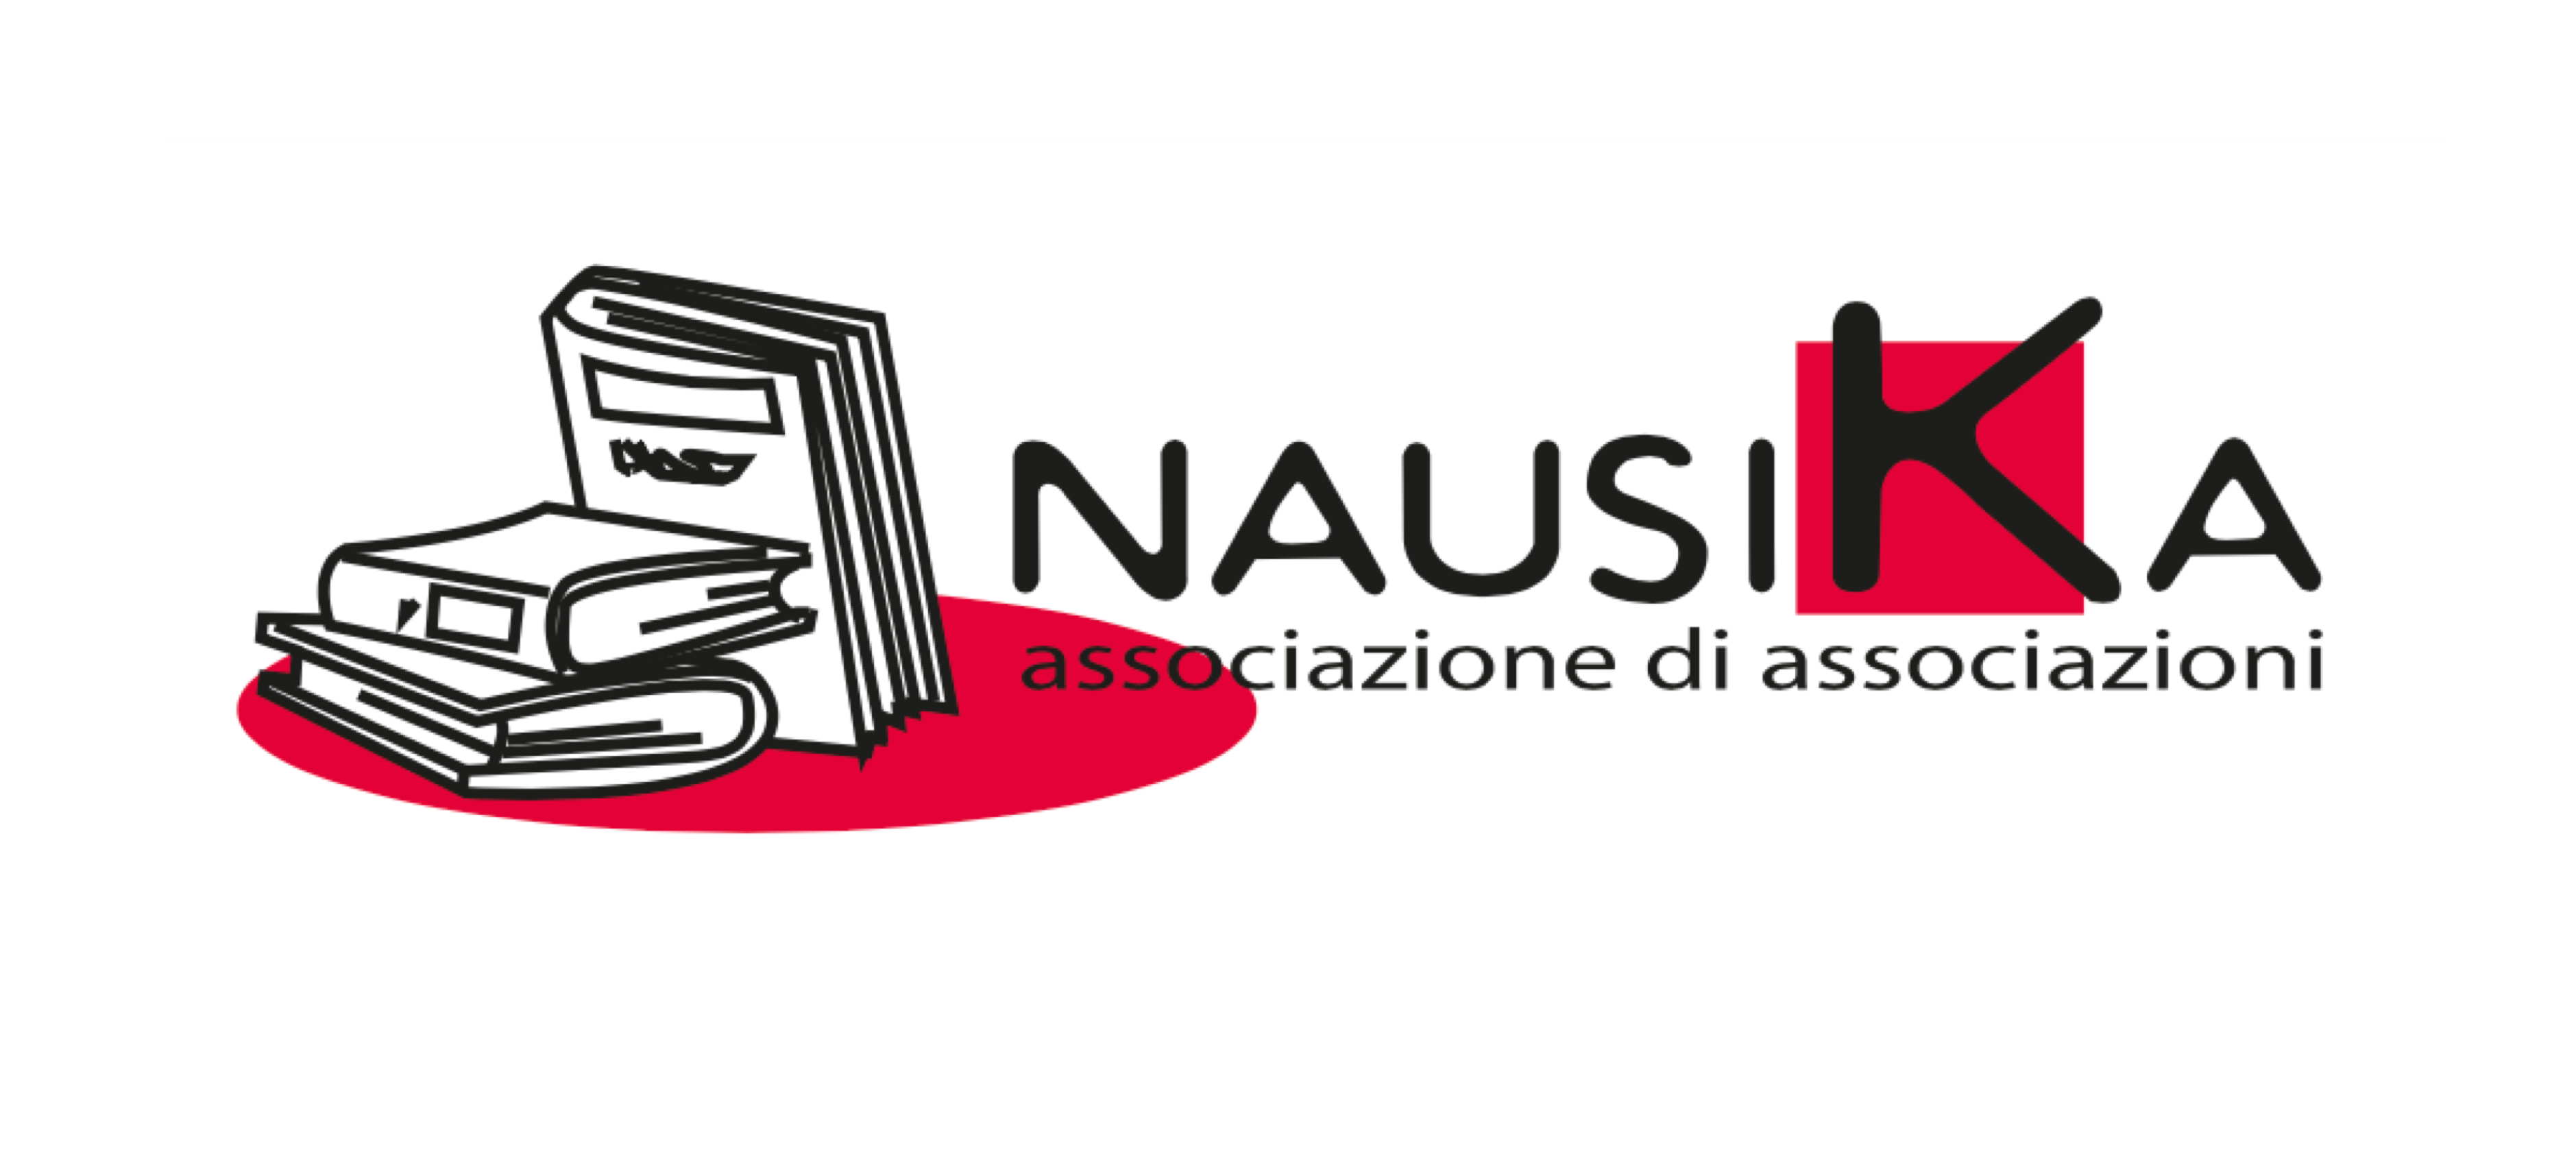 Logo NAUSIKA - Caso studio Riconnessioni